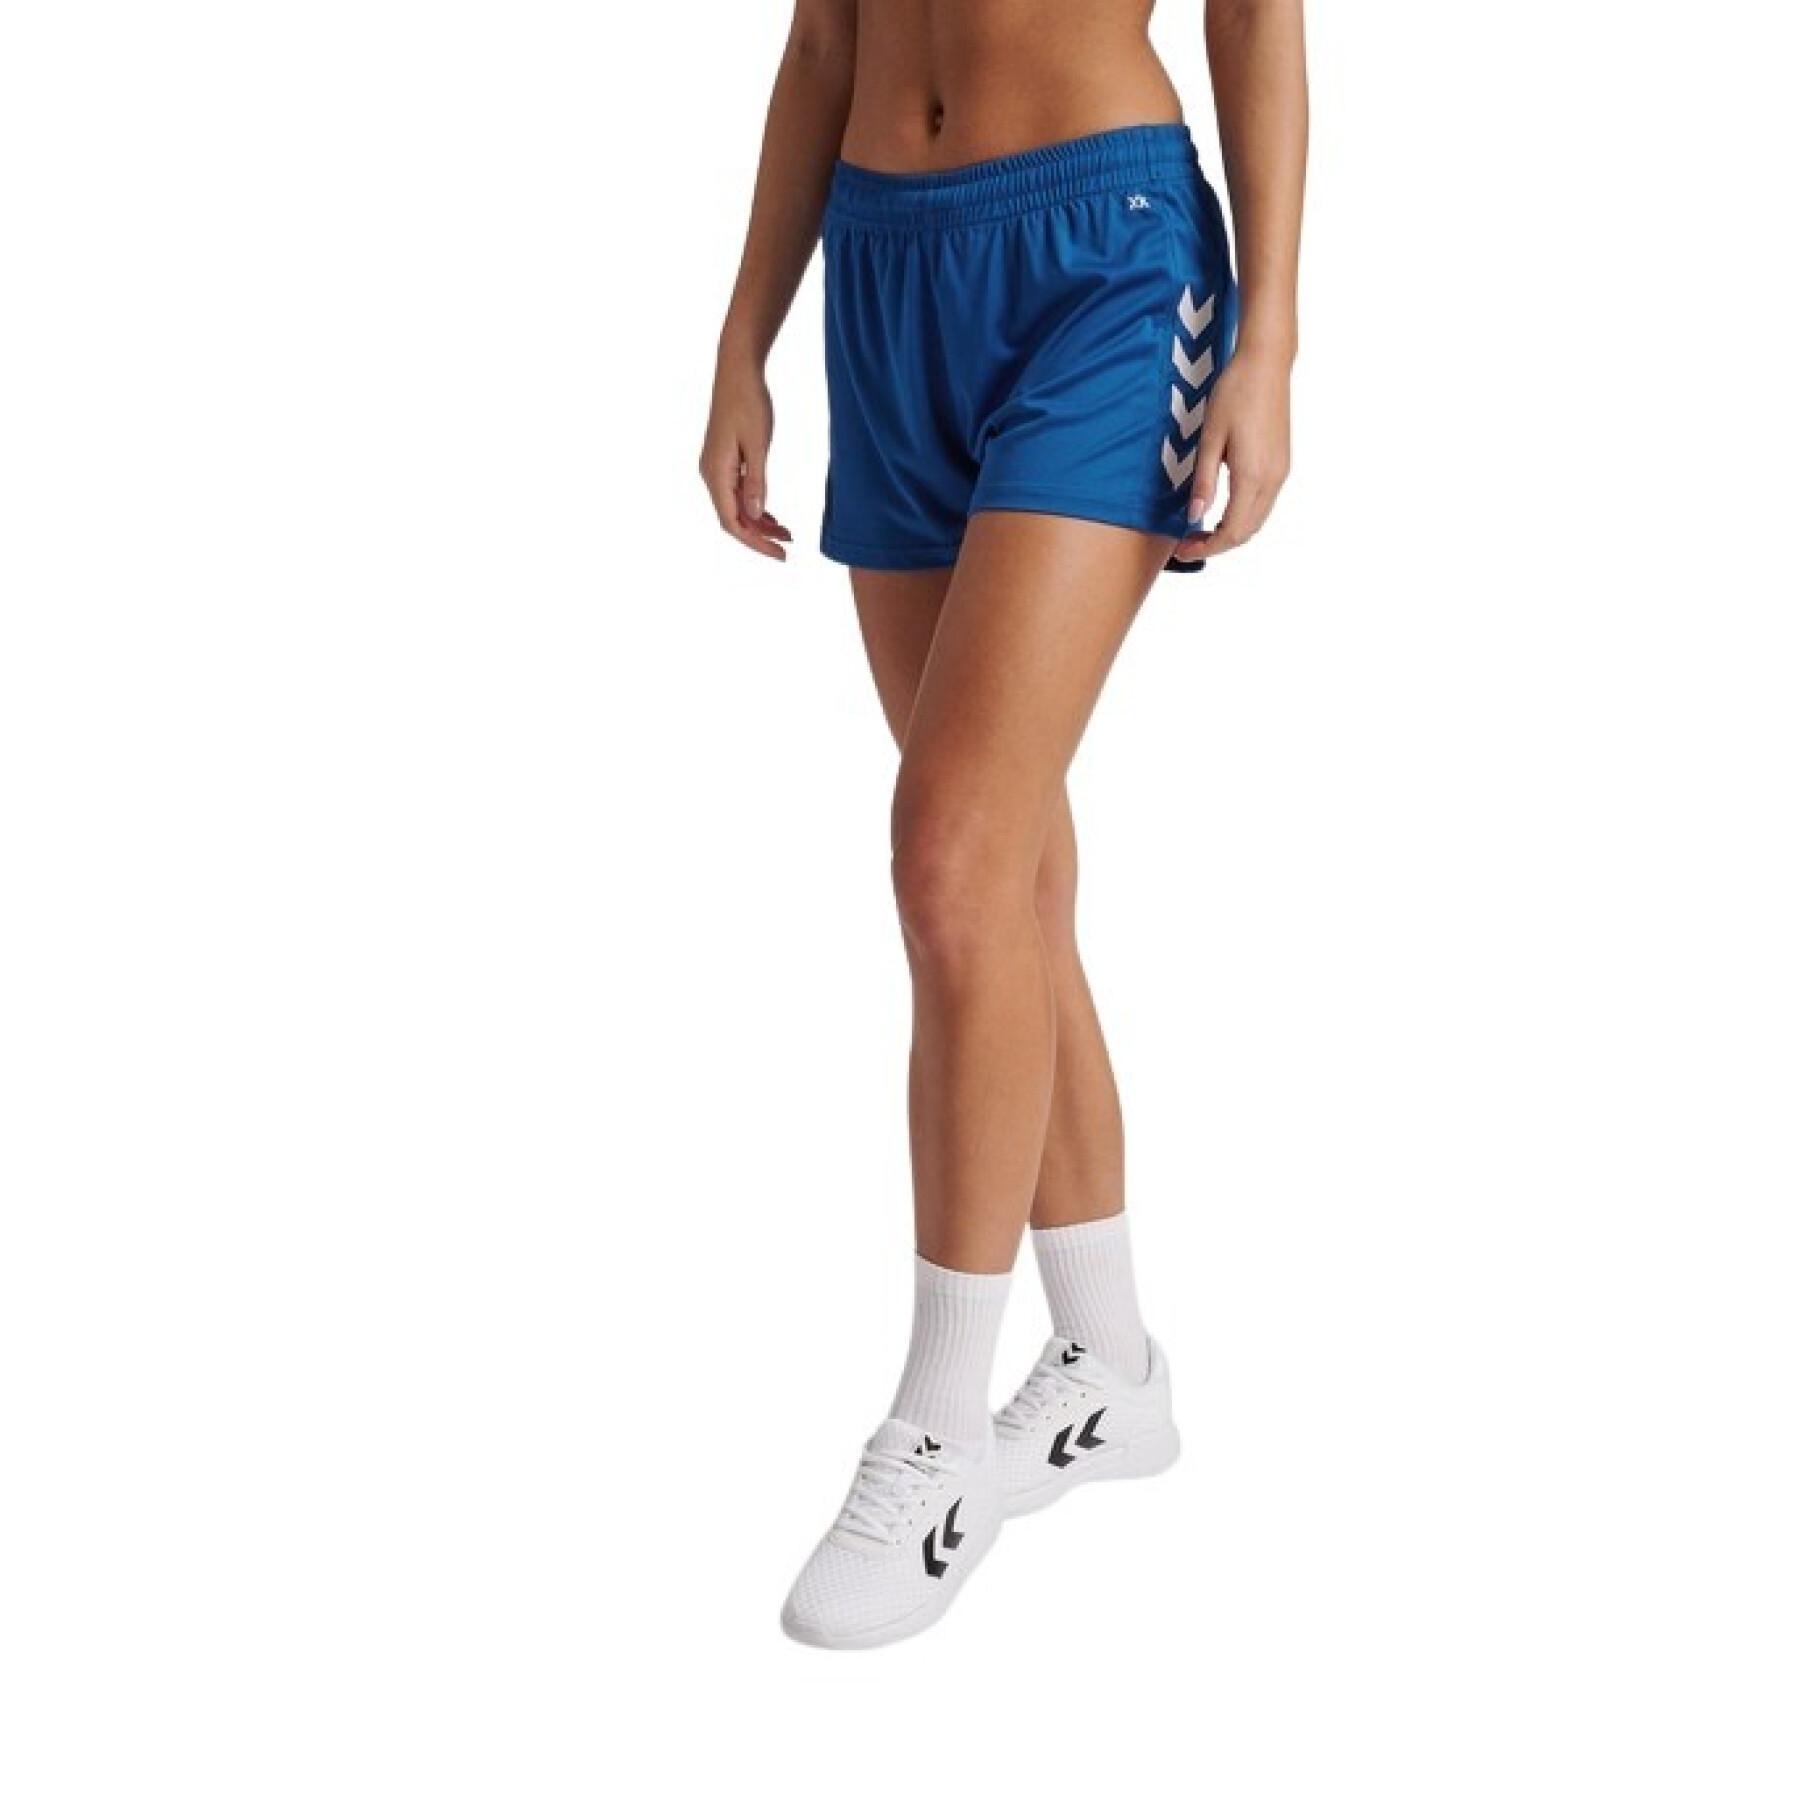 Kan ignoreres Men Ungdom Women's shorts Hummel hmlCORE - Shorts - Textile - Handball wear